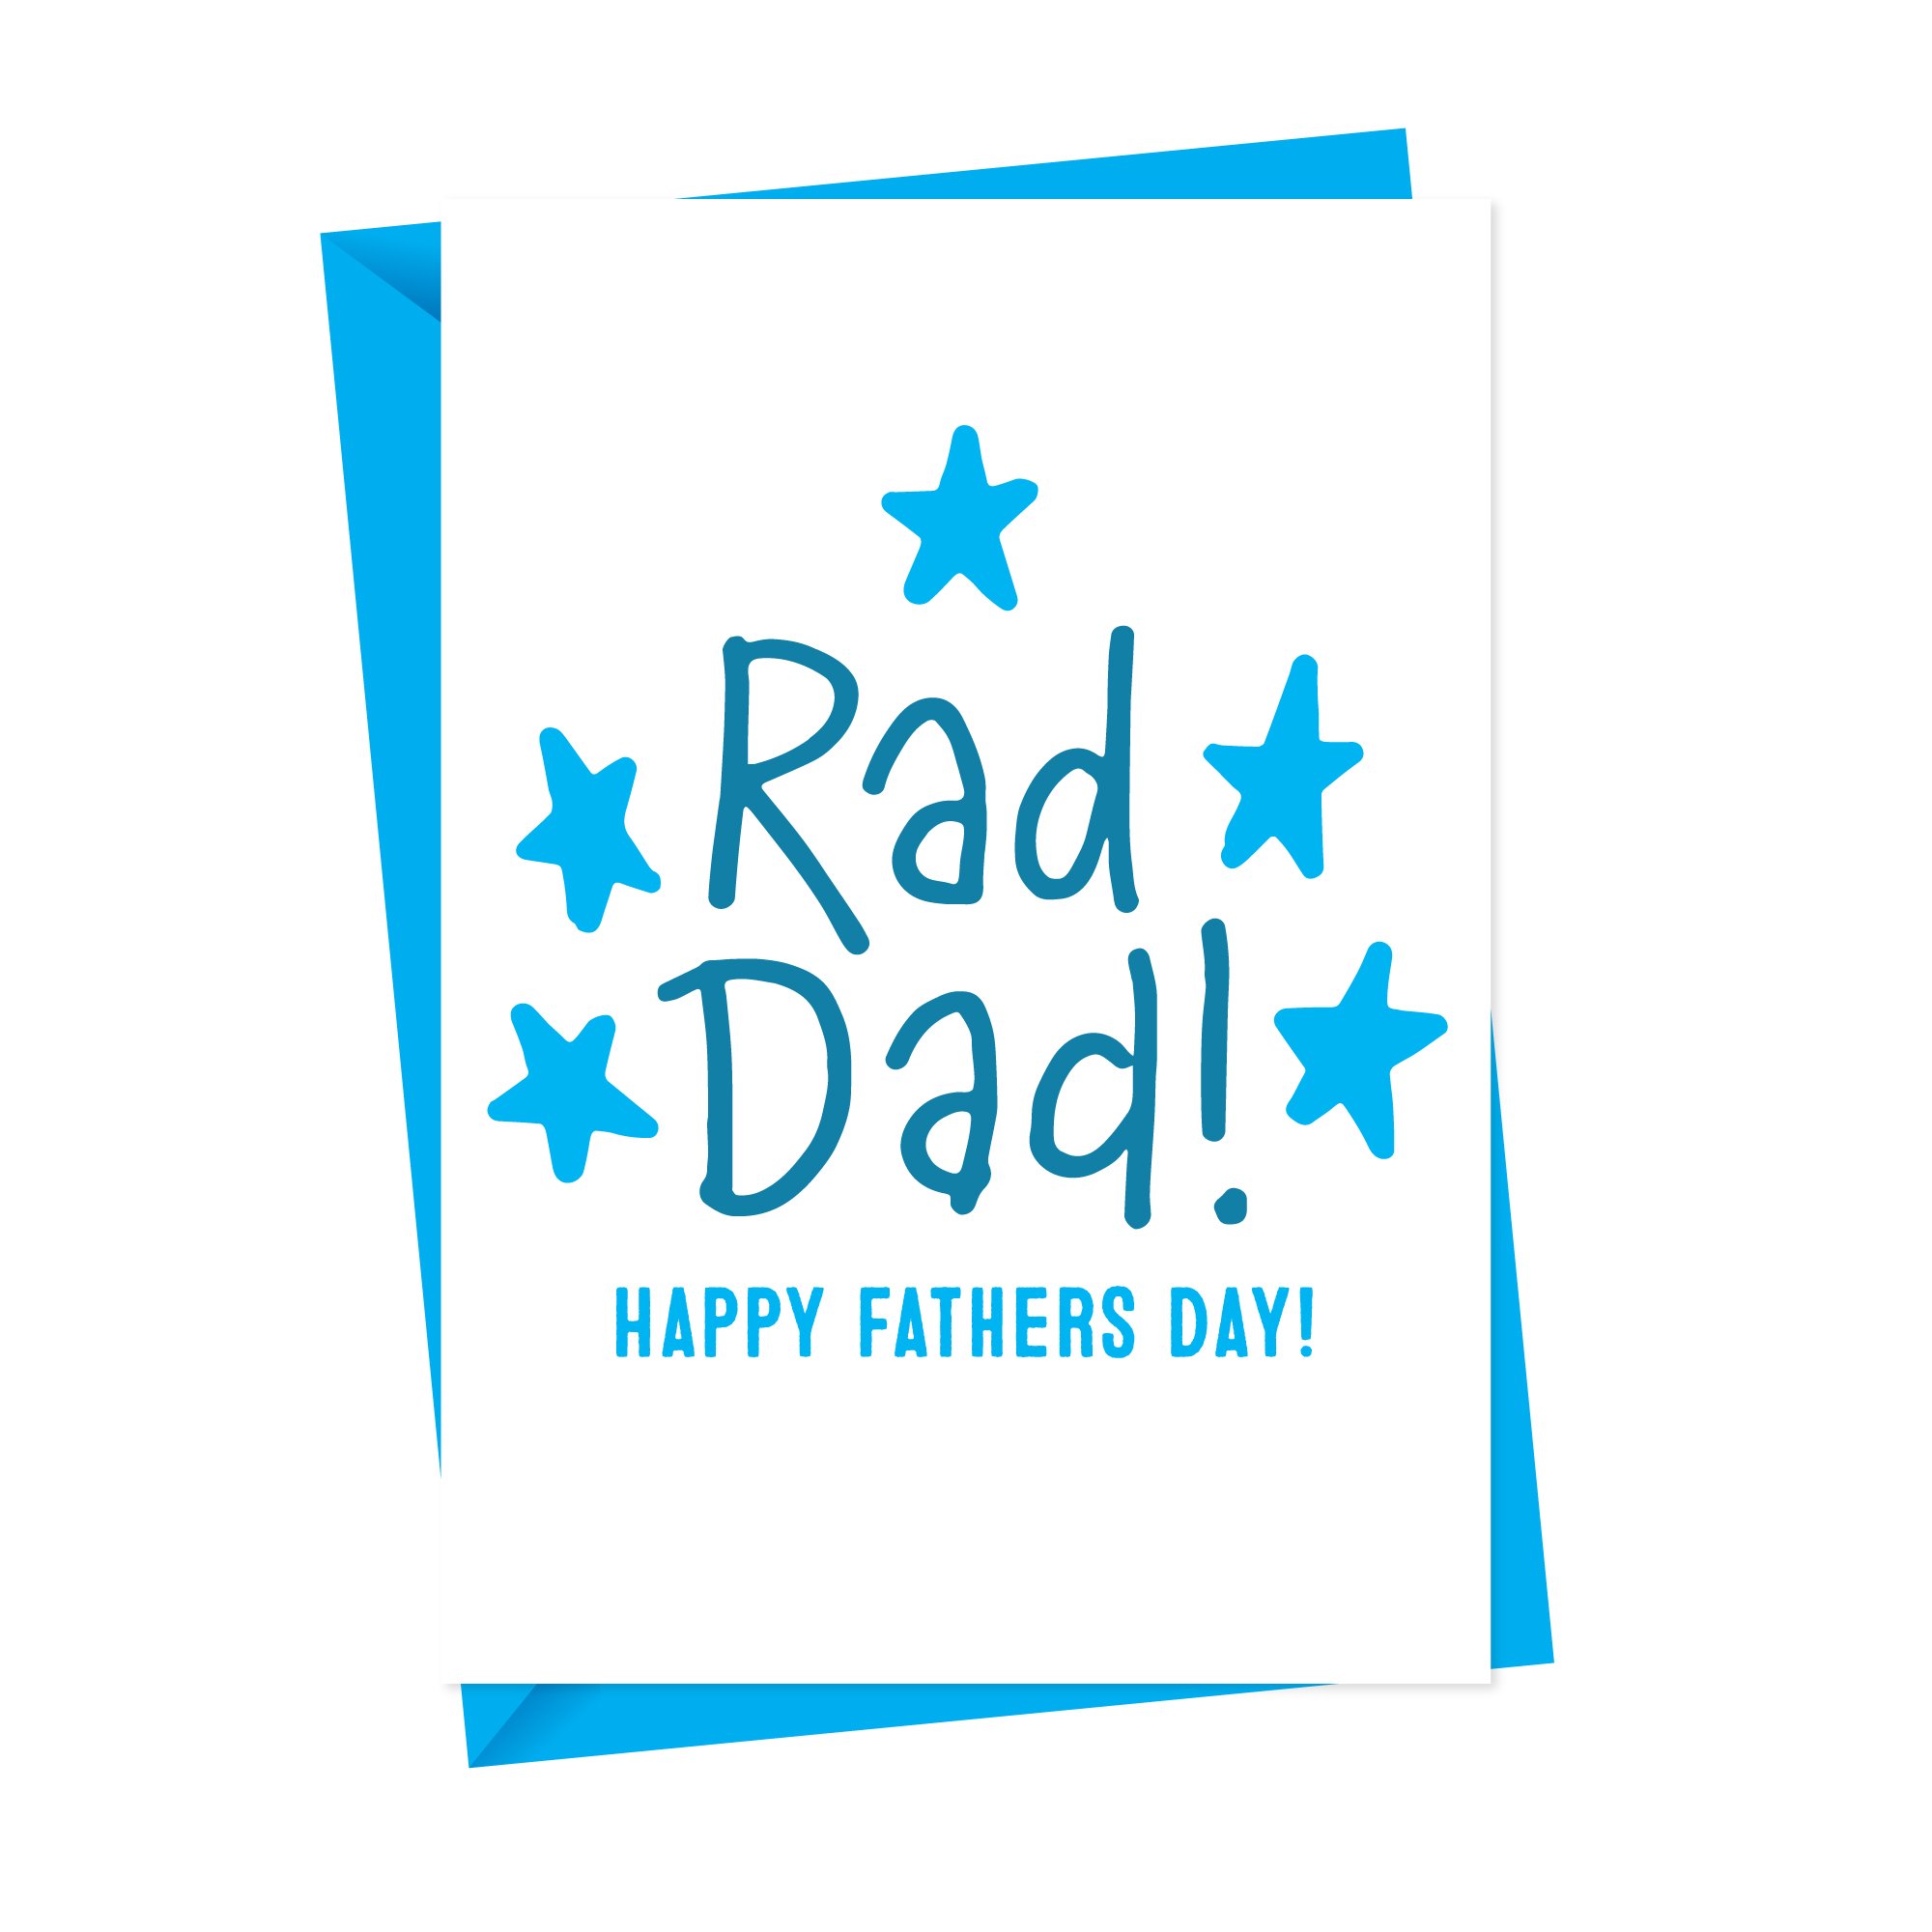 Rad Dad Fathers Day Card